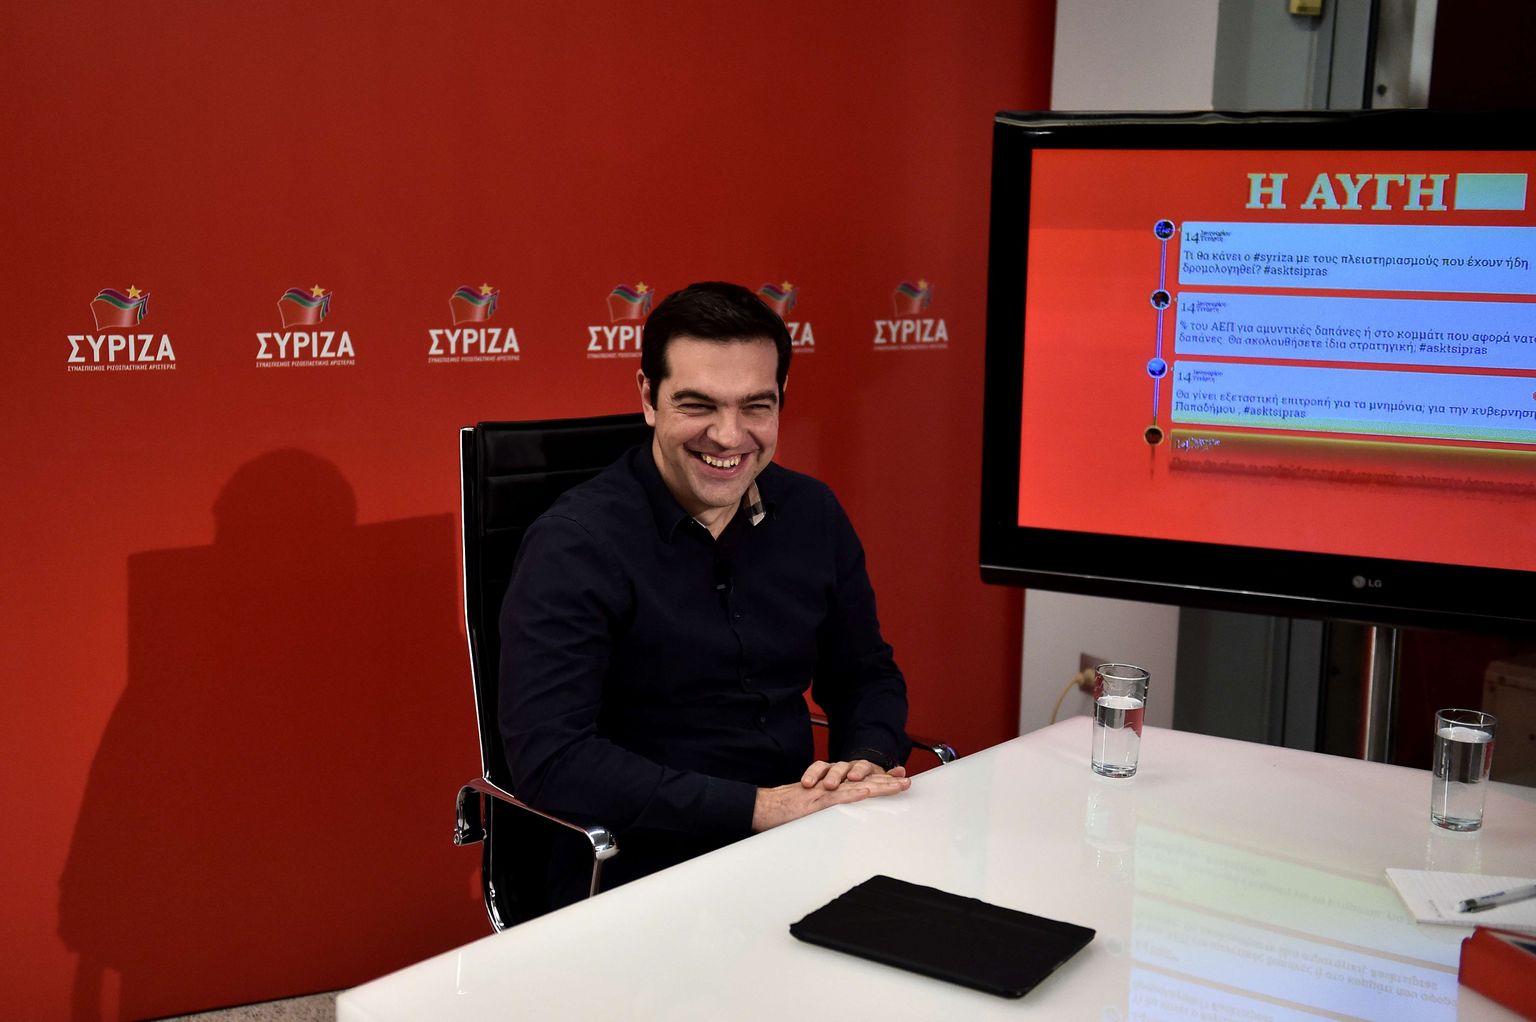 Syriza Alexis Tsipras intervjuud andmas.